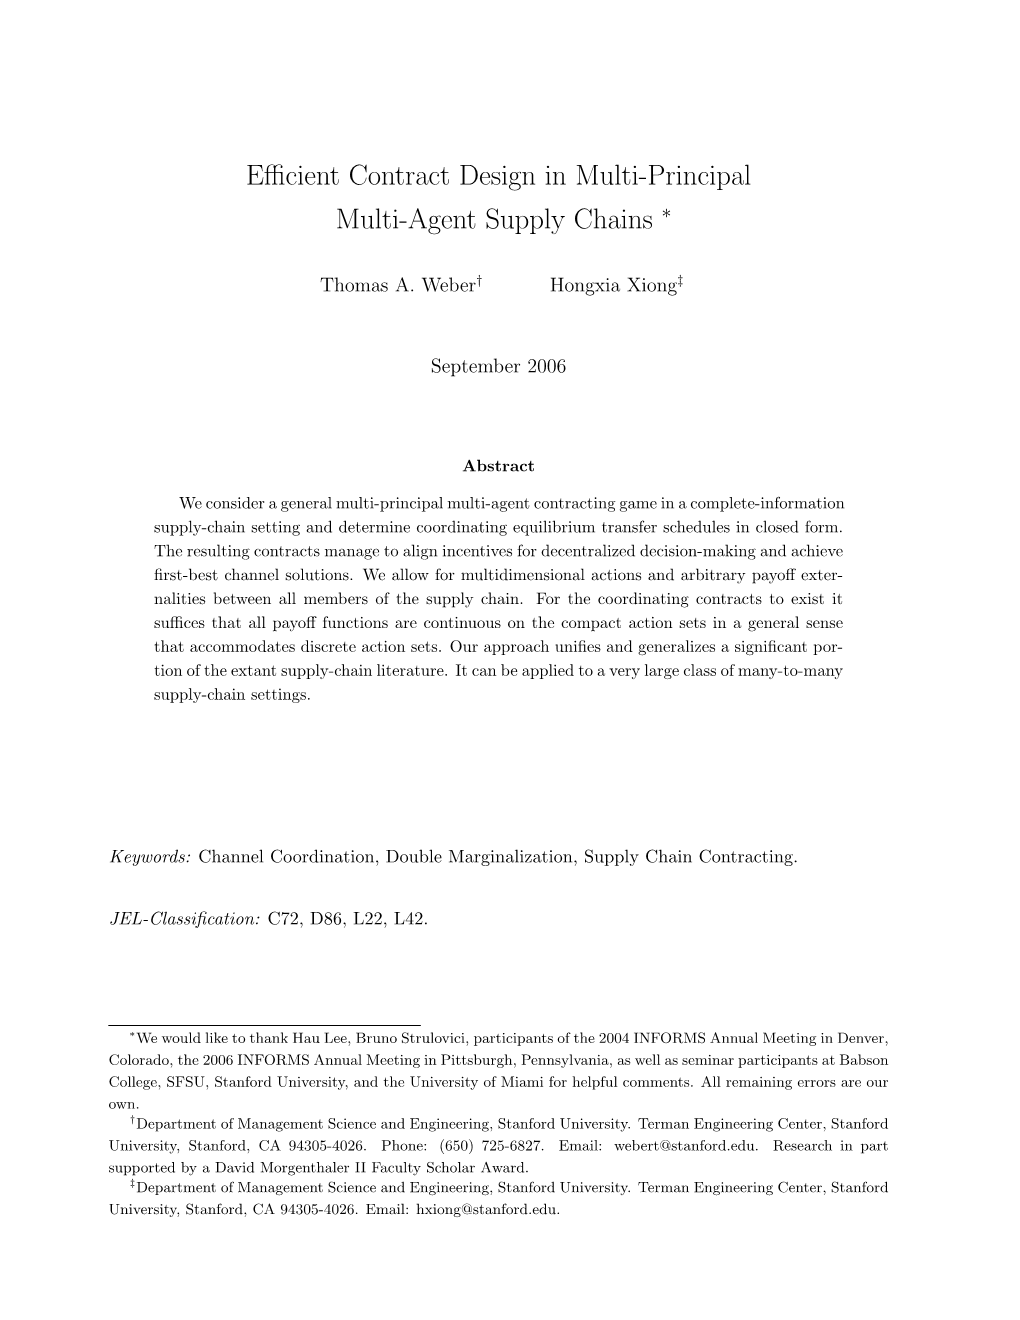 Efficient Contract Design in Multi-Principal Multi-Agent